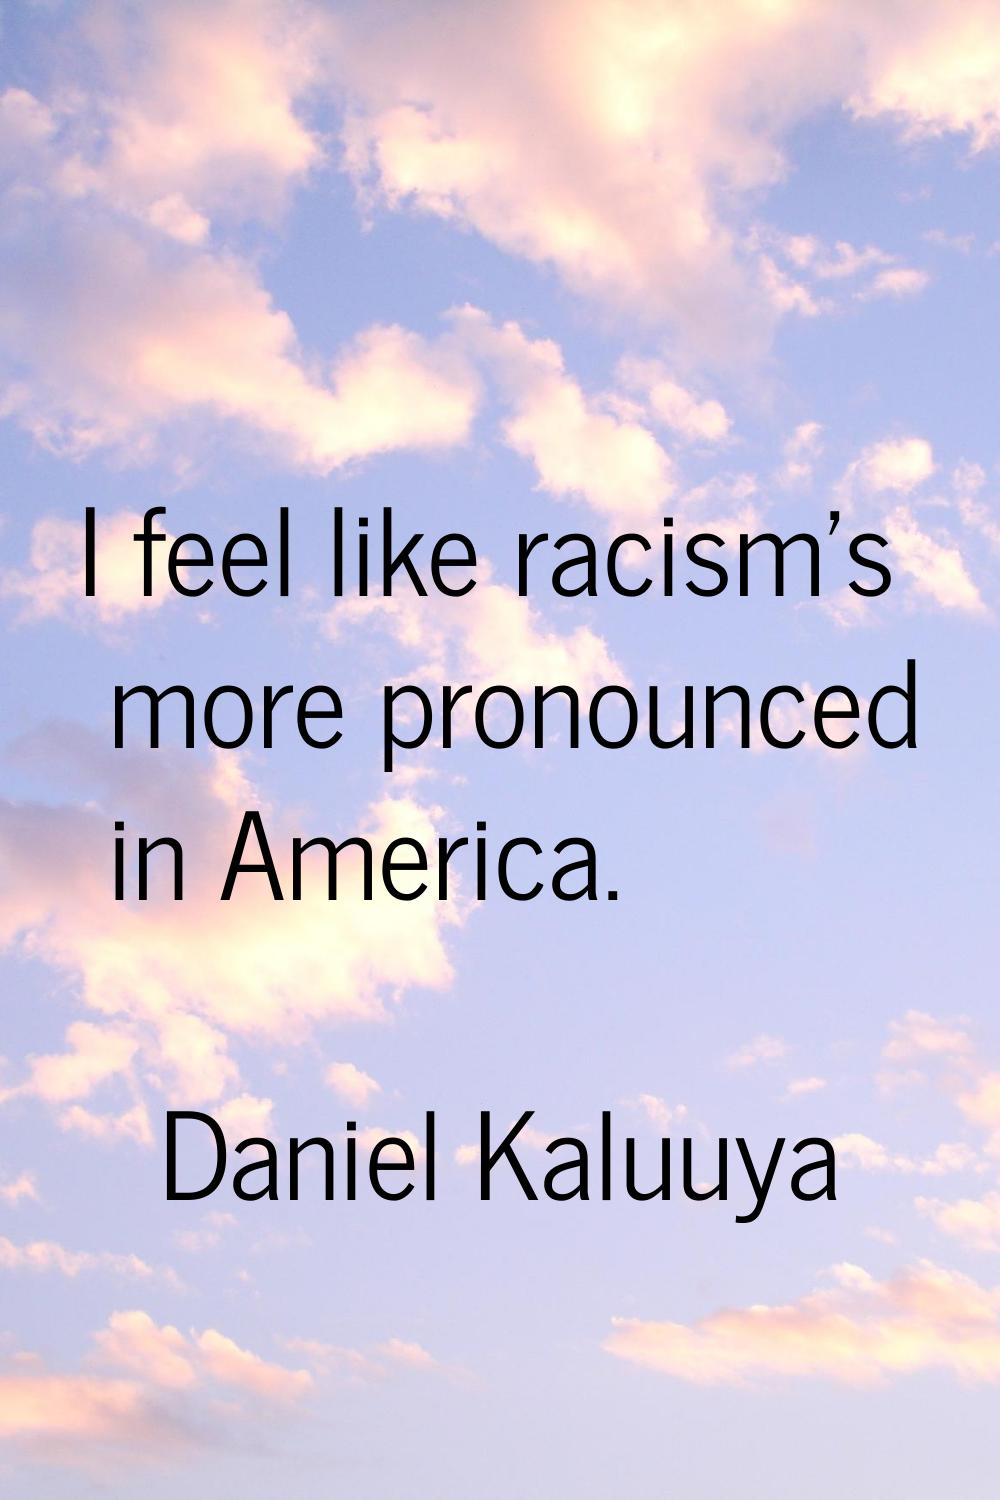 I feel like racism's more pronounced in America.